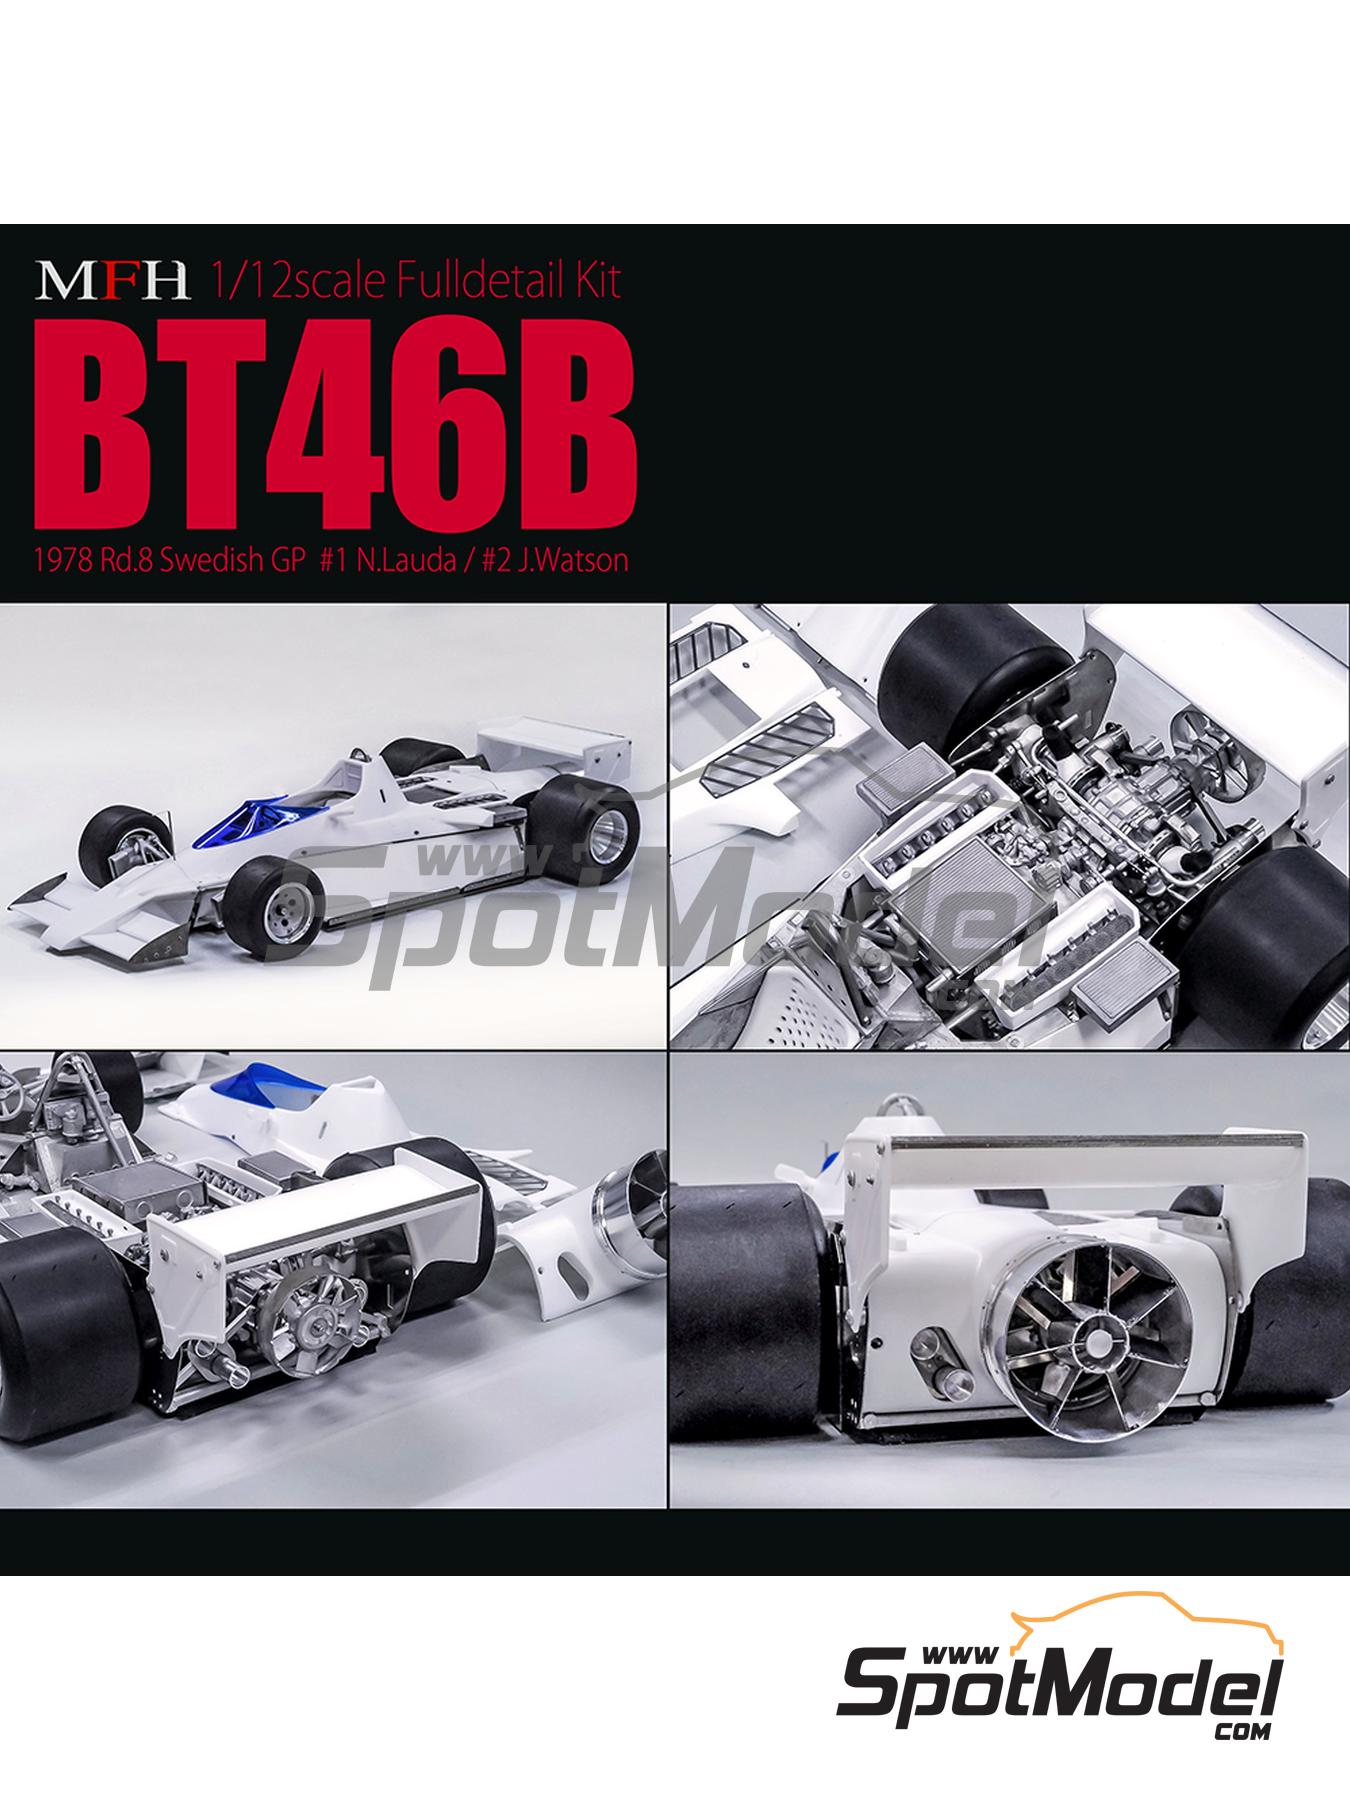 Model Factory Hiro K461: Car scale model kit 1/12 scale - Brabham